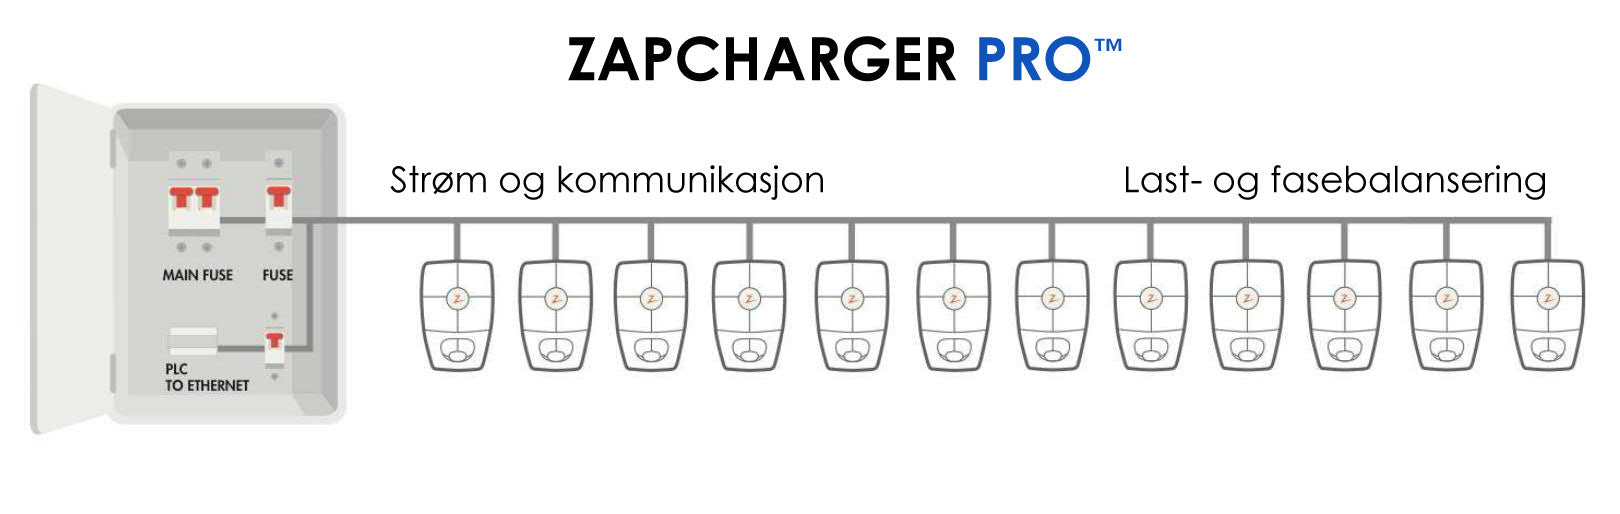 ZapCharger Pro - Intelligent ladesystem